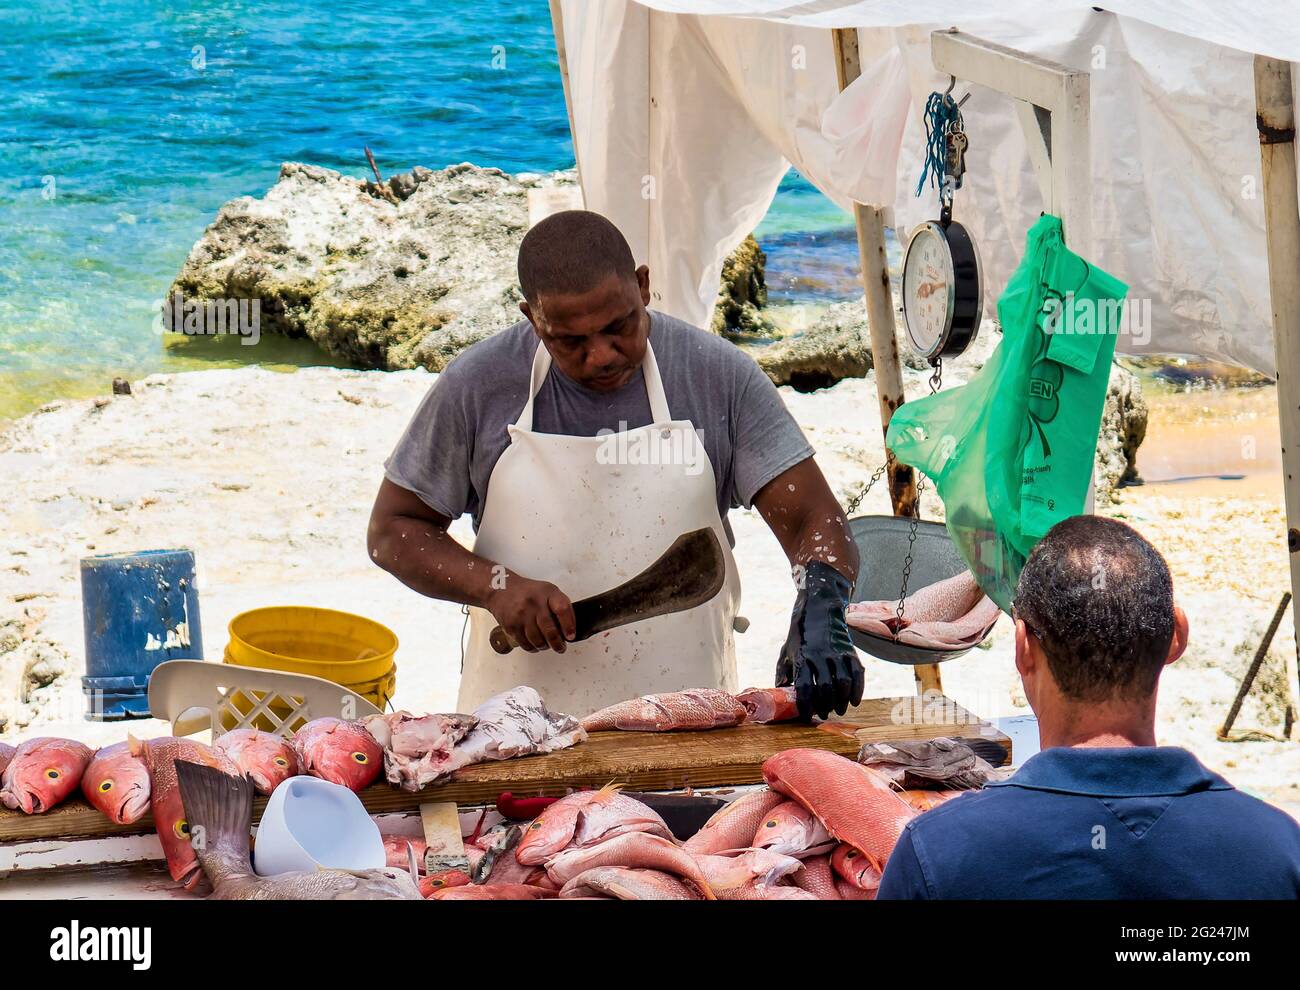 Fishmonger serves up freshly caught fish on a Caribbean island beach Stock Photo